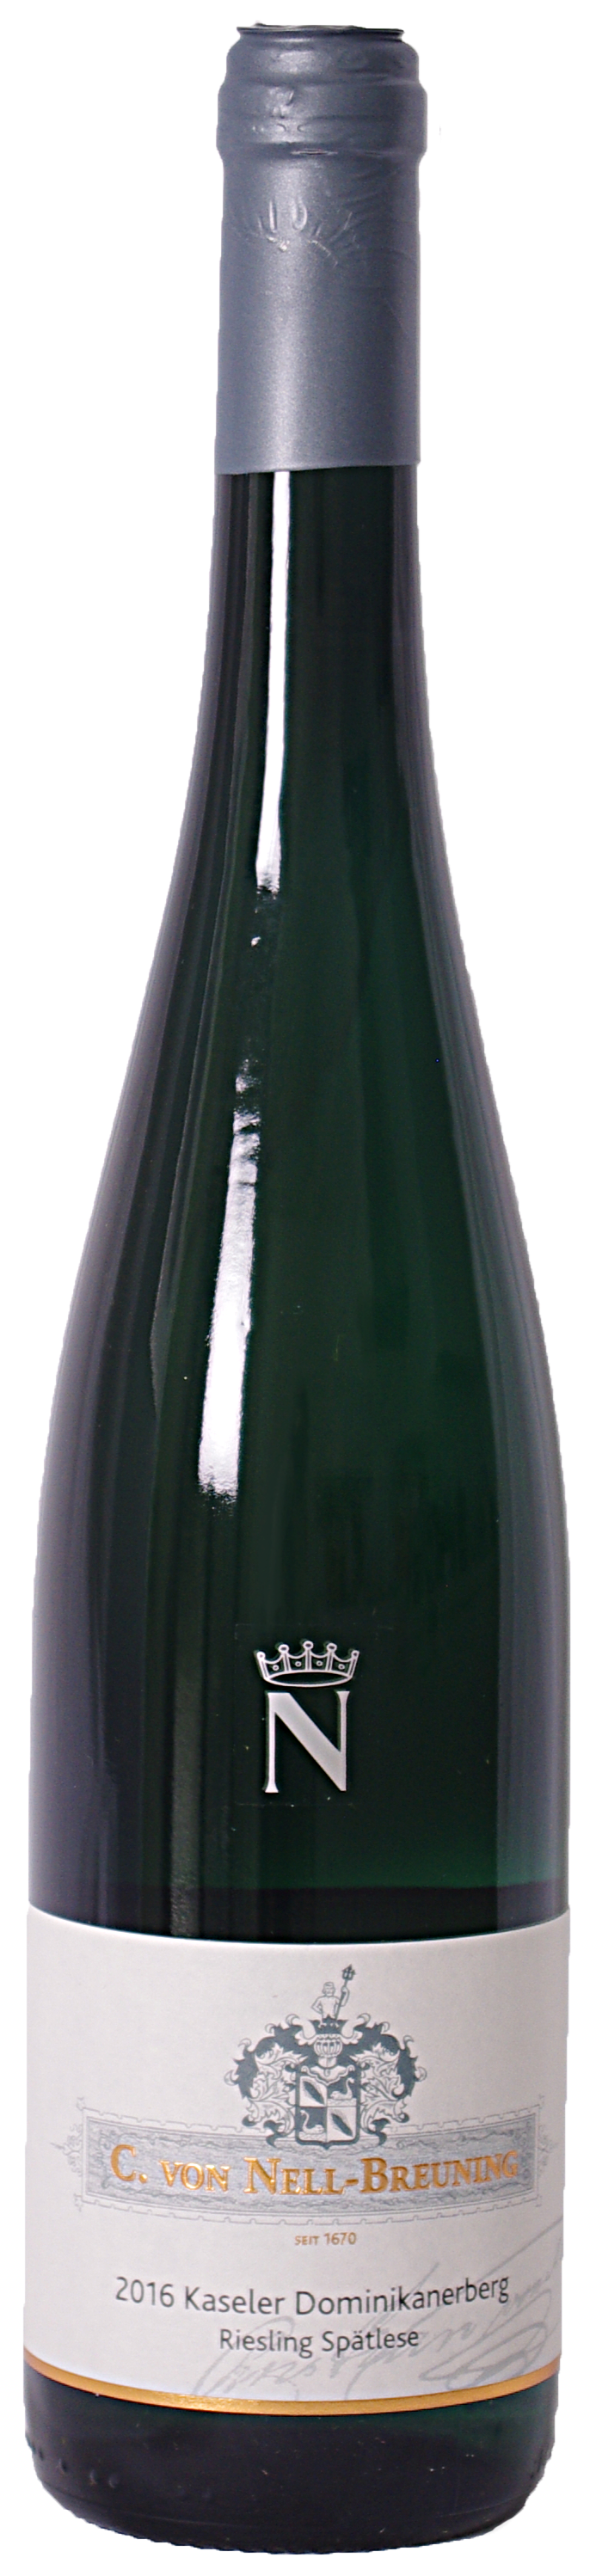 Weingut C. von Nell-Breuning Kaseler Dominikanerberg (Monopole) Riesling Spatlese 2016